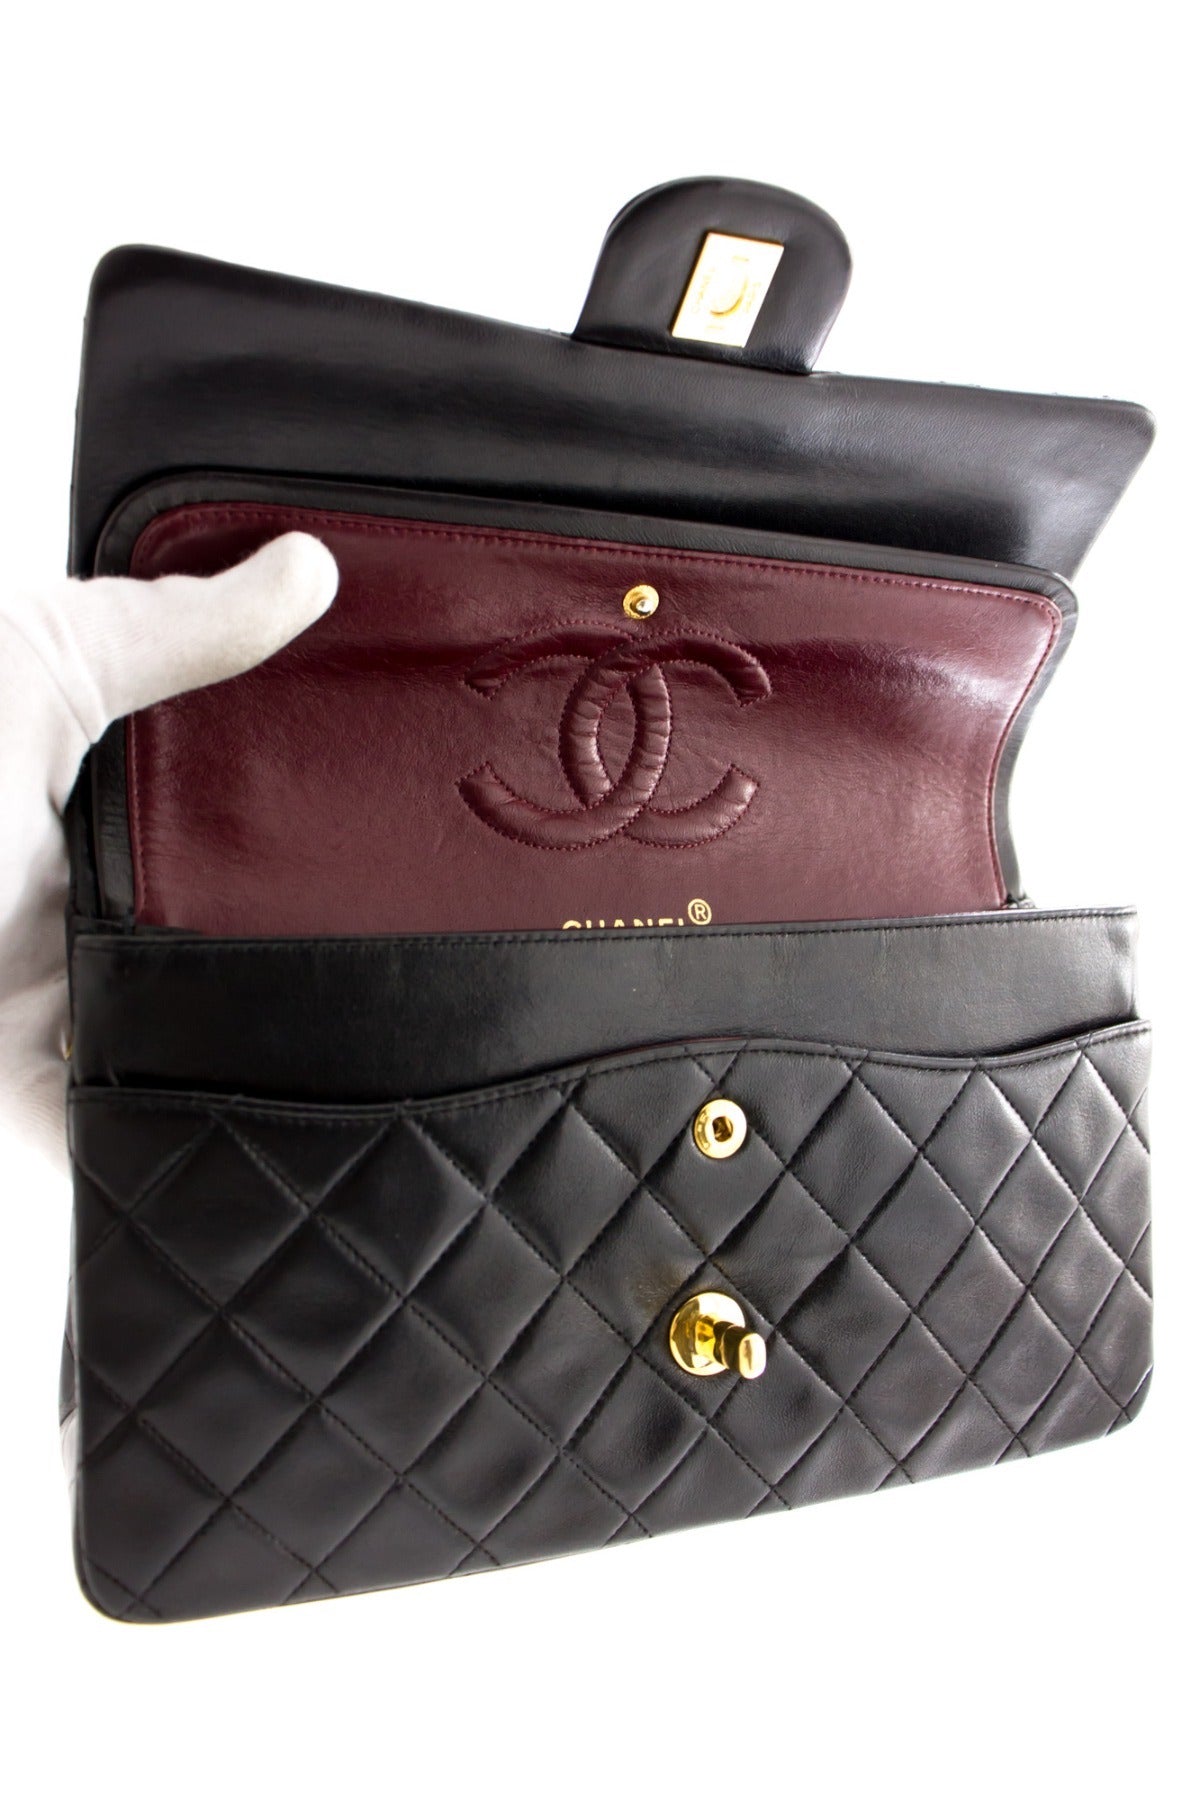 Chanel Patent Quilted Large Classic Double Flap Bag | Vivrelle